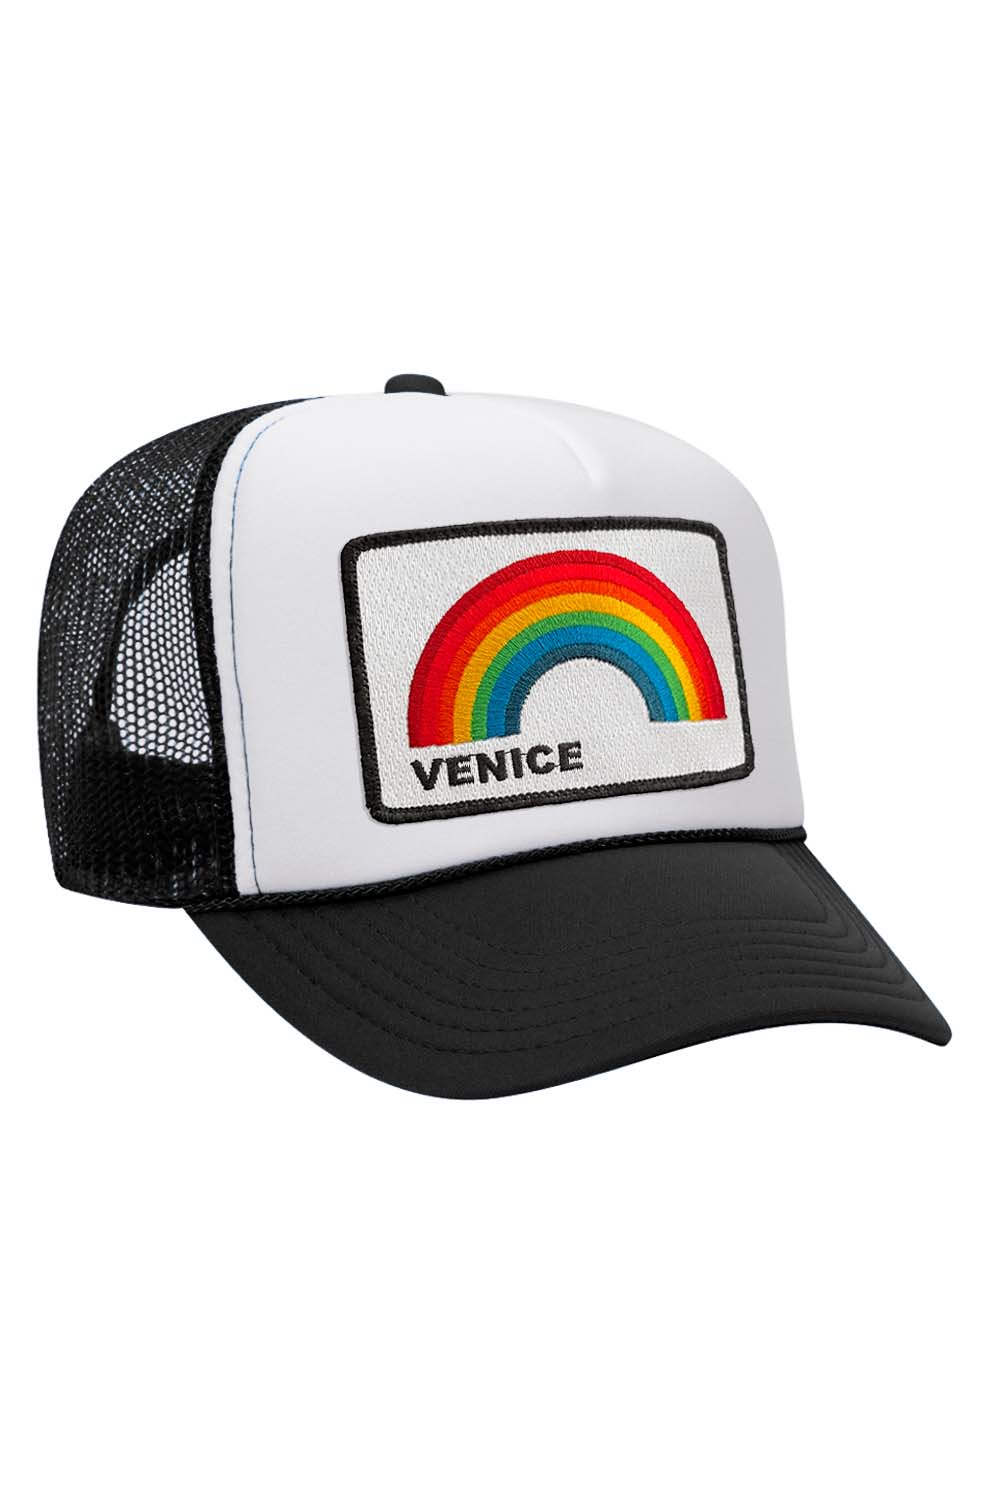 VENICE RAINBOW TRUCKER HAT HATS Aviator Nation OS BLACK // WHITE // BLACK 